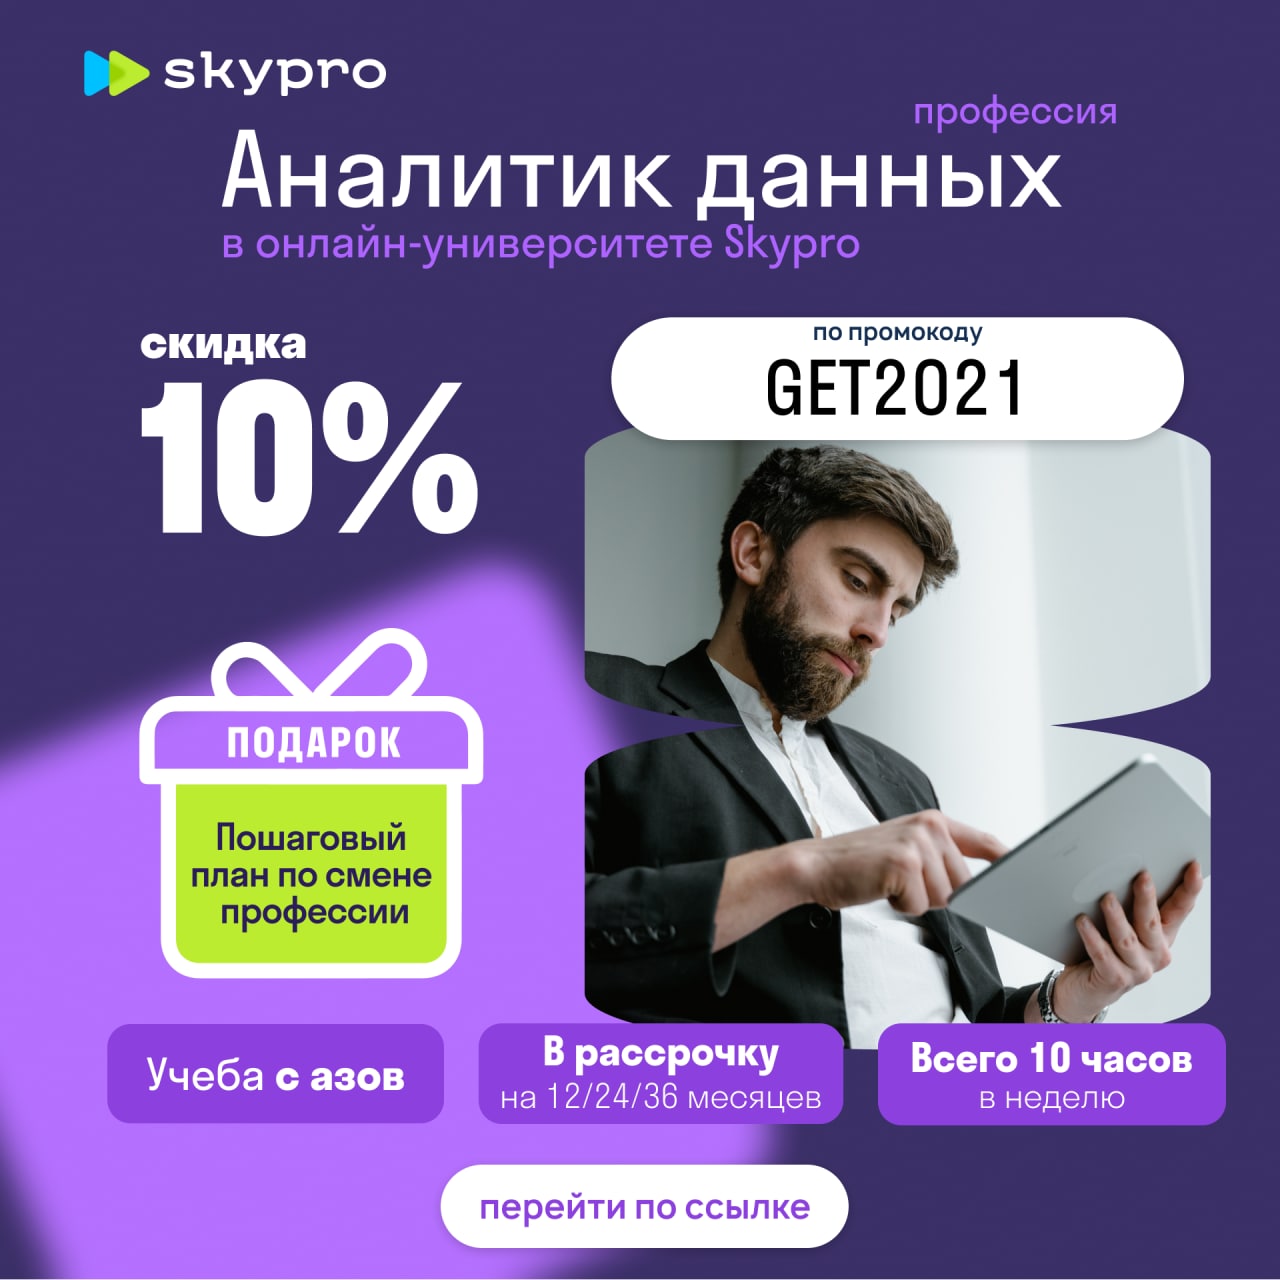 Skypro курсы отзывы. Skypro аналитик данных. Курсы аналитики. Skypro реклама.